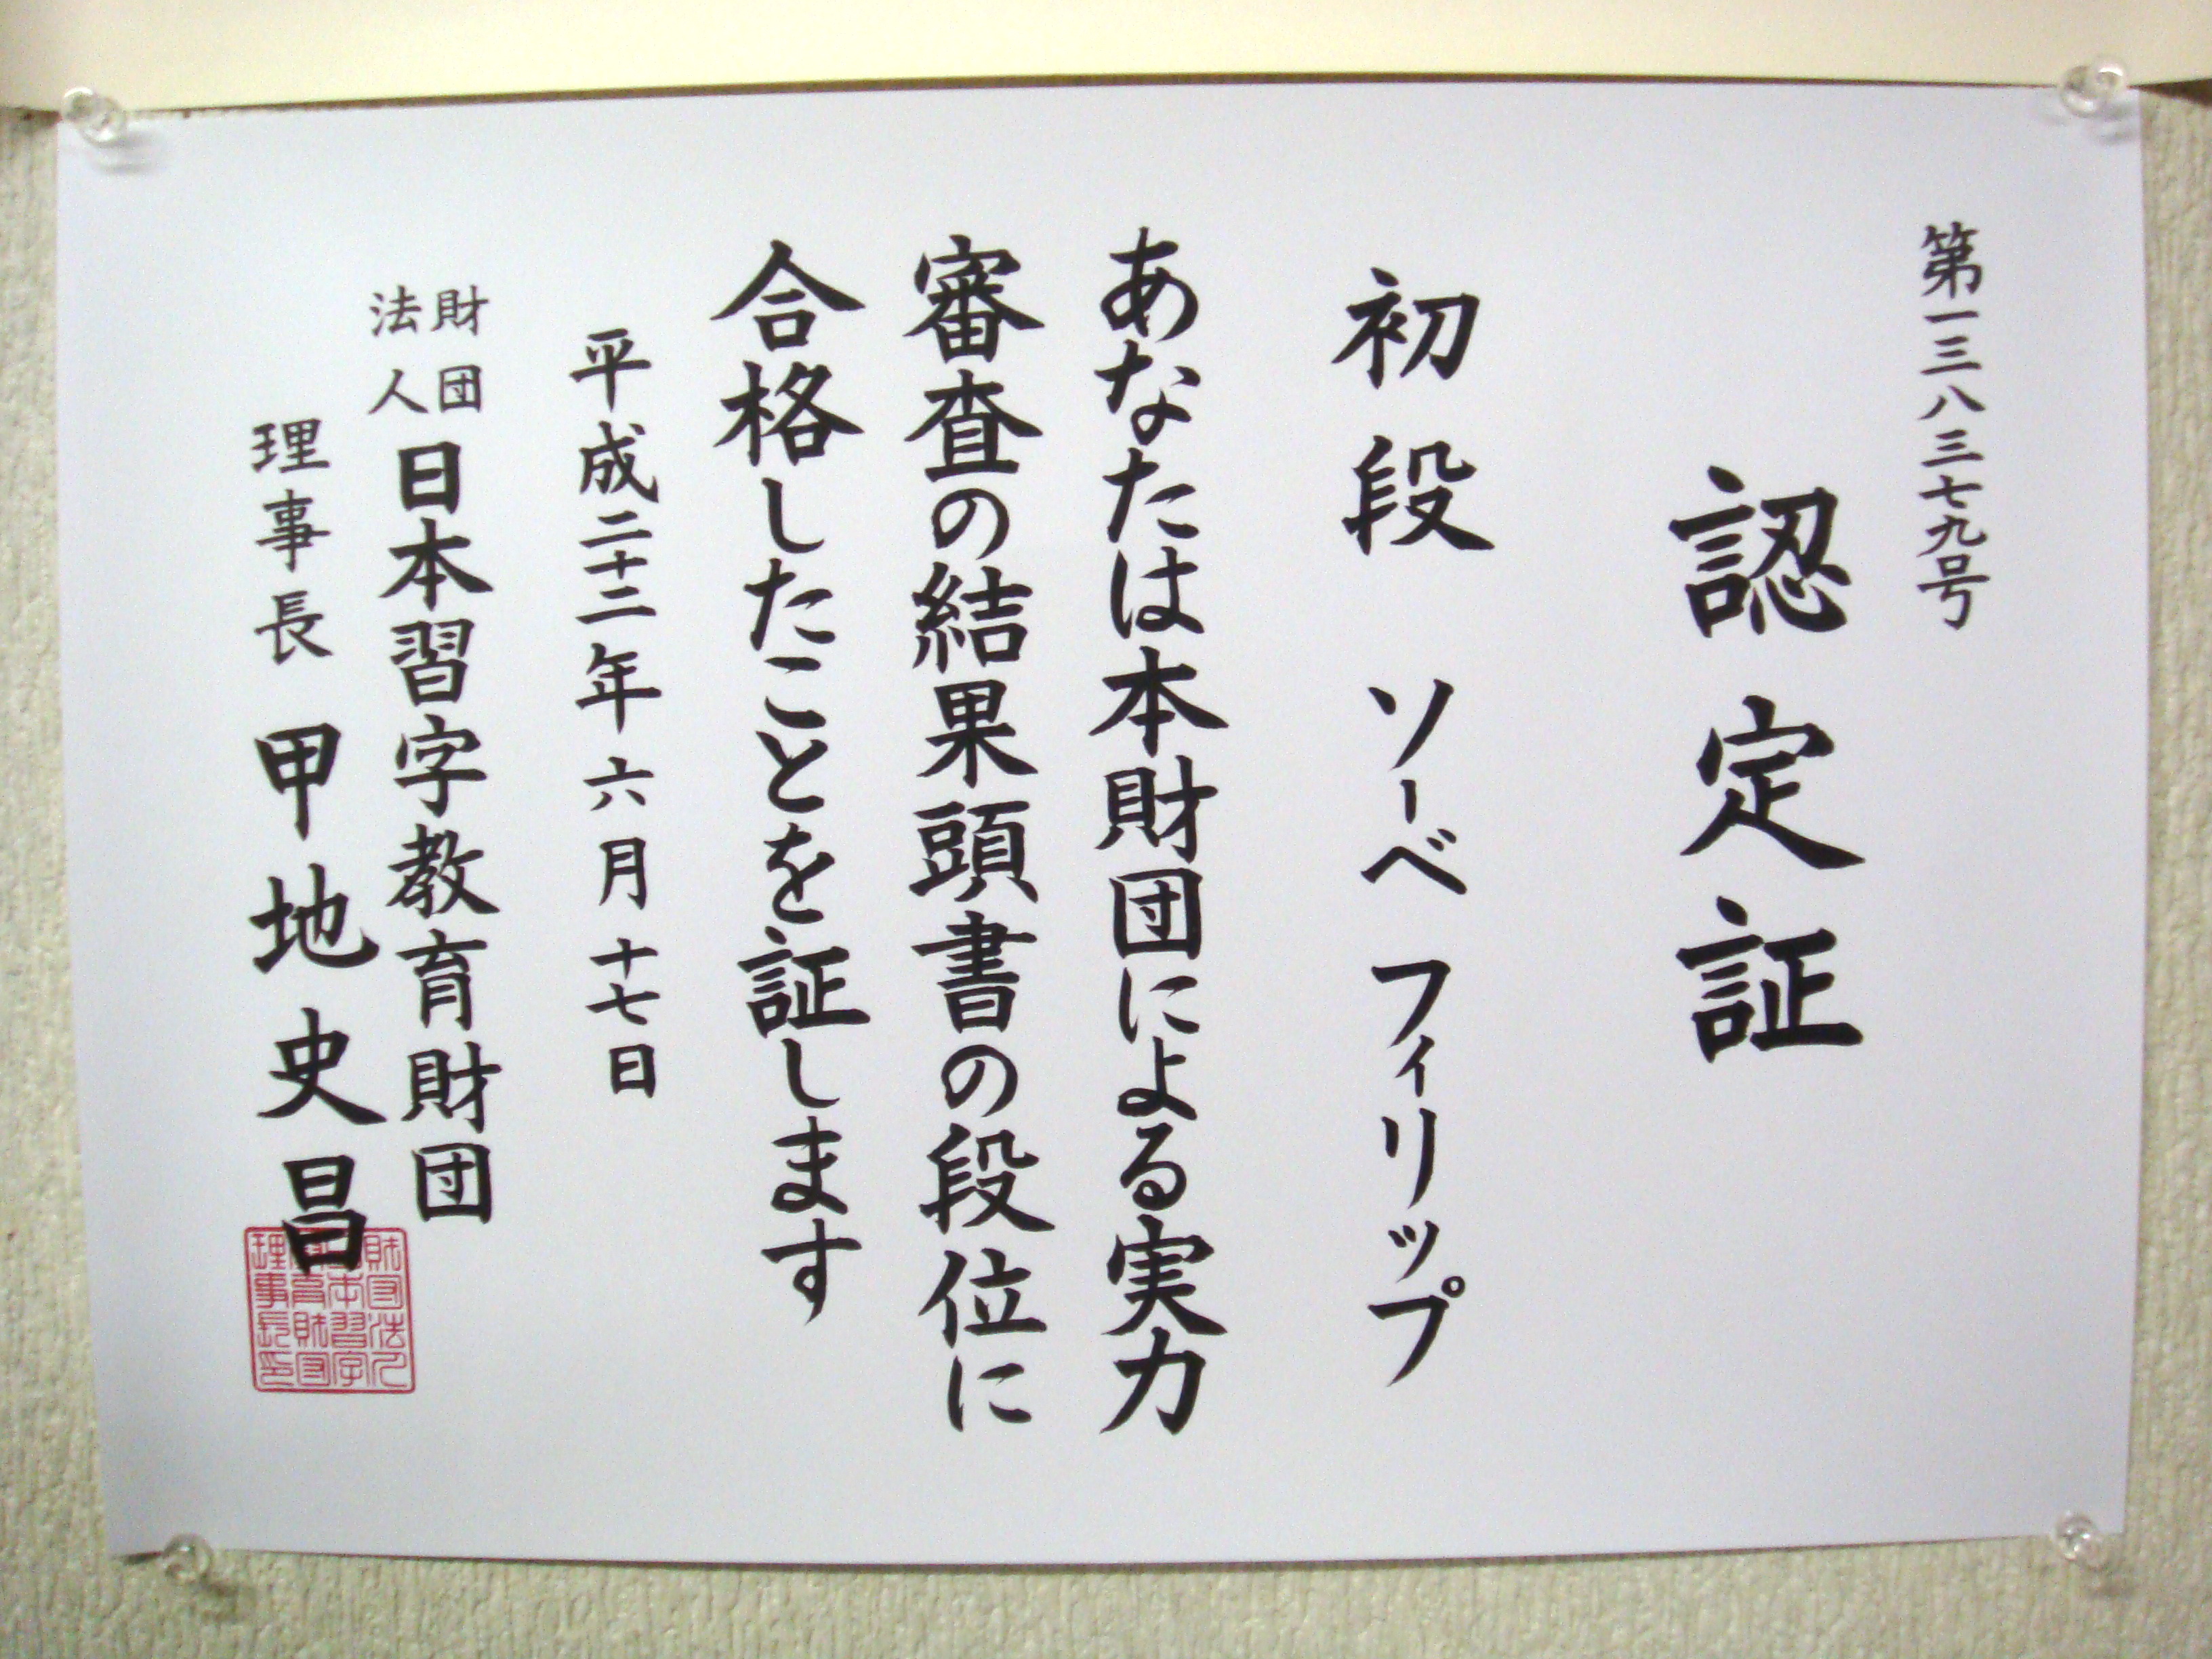 sho-dan certificate